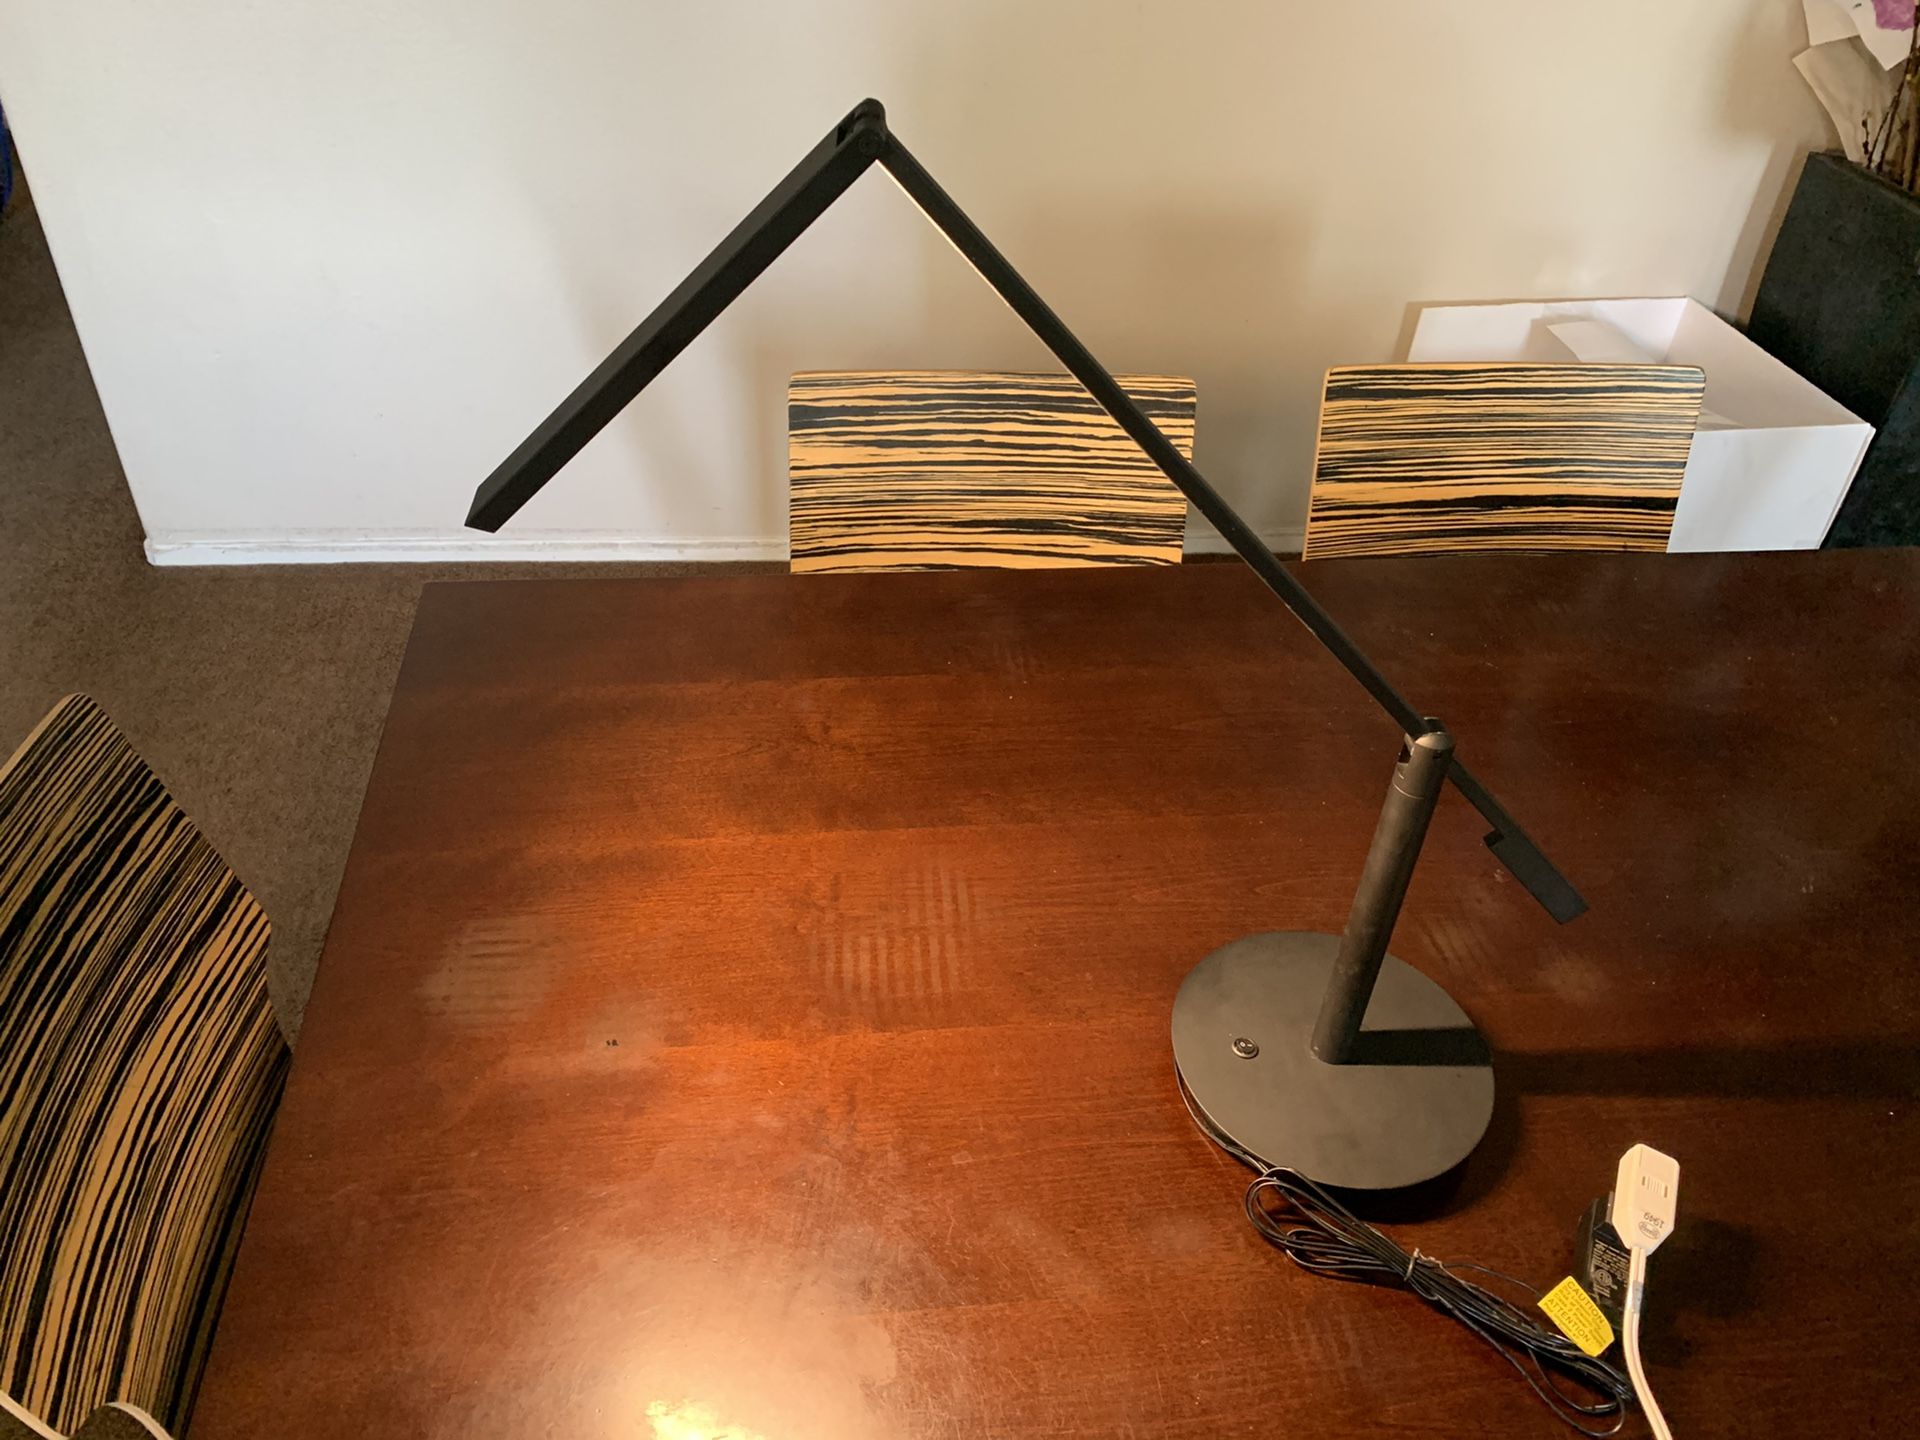 Hotel desk task lamp